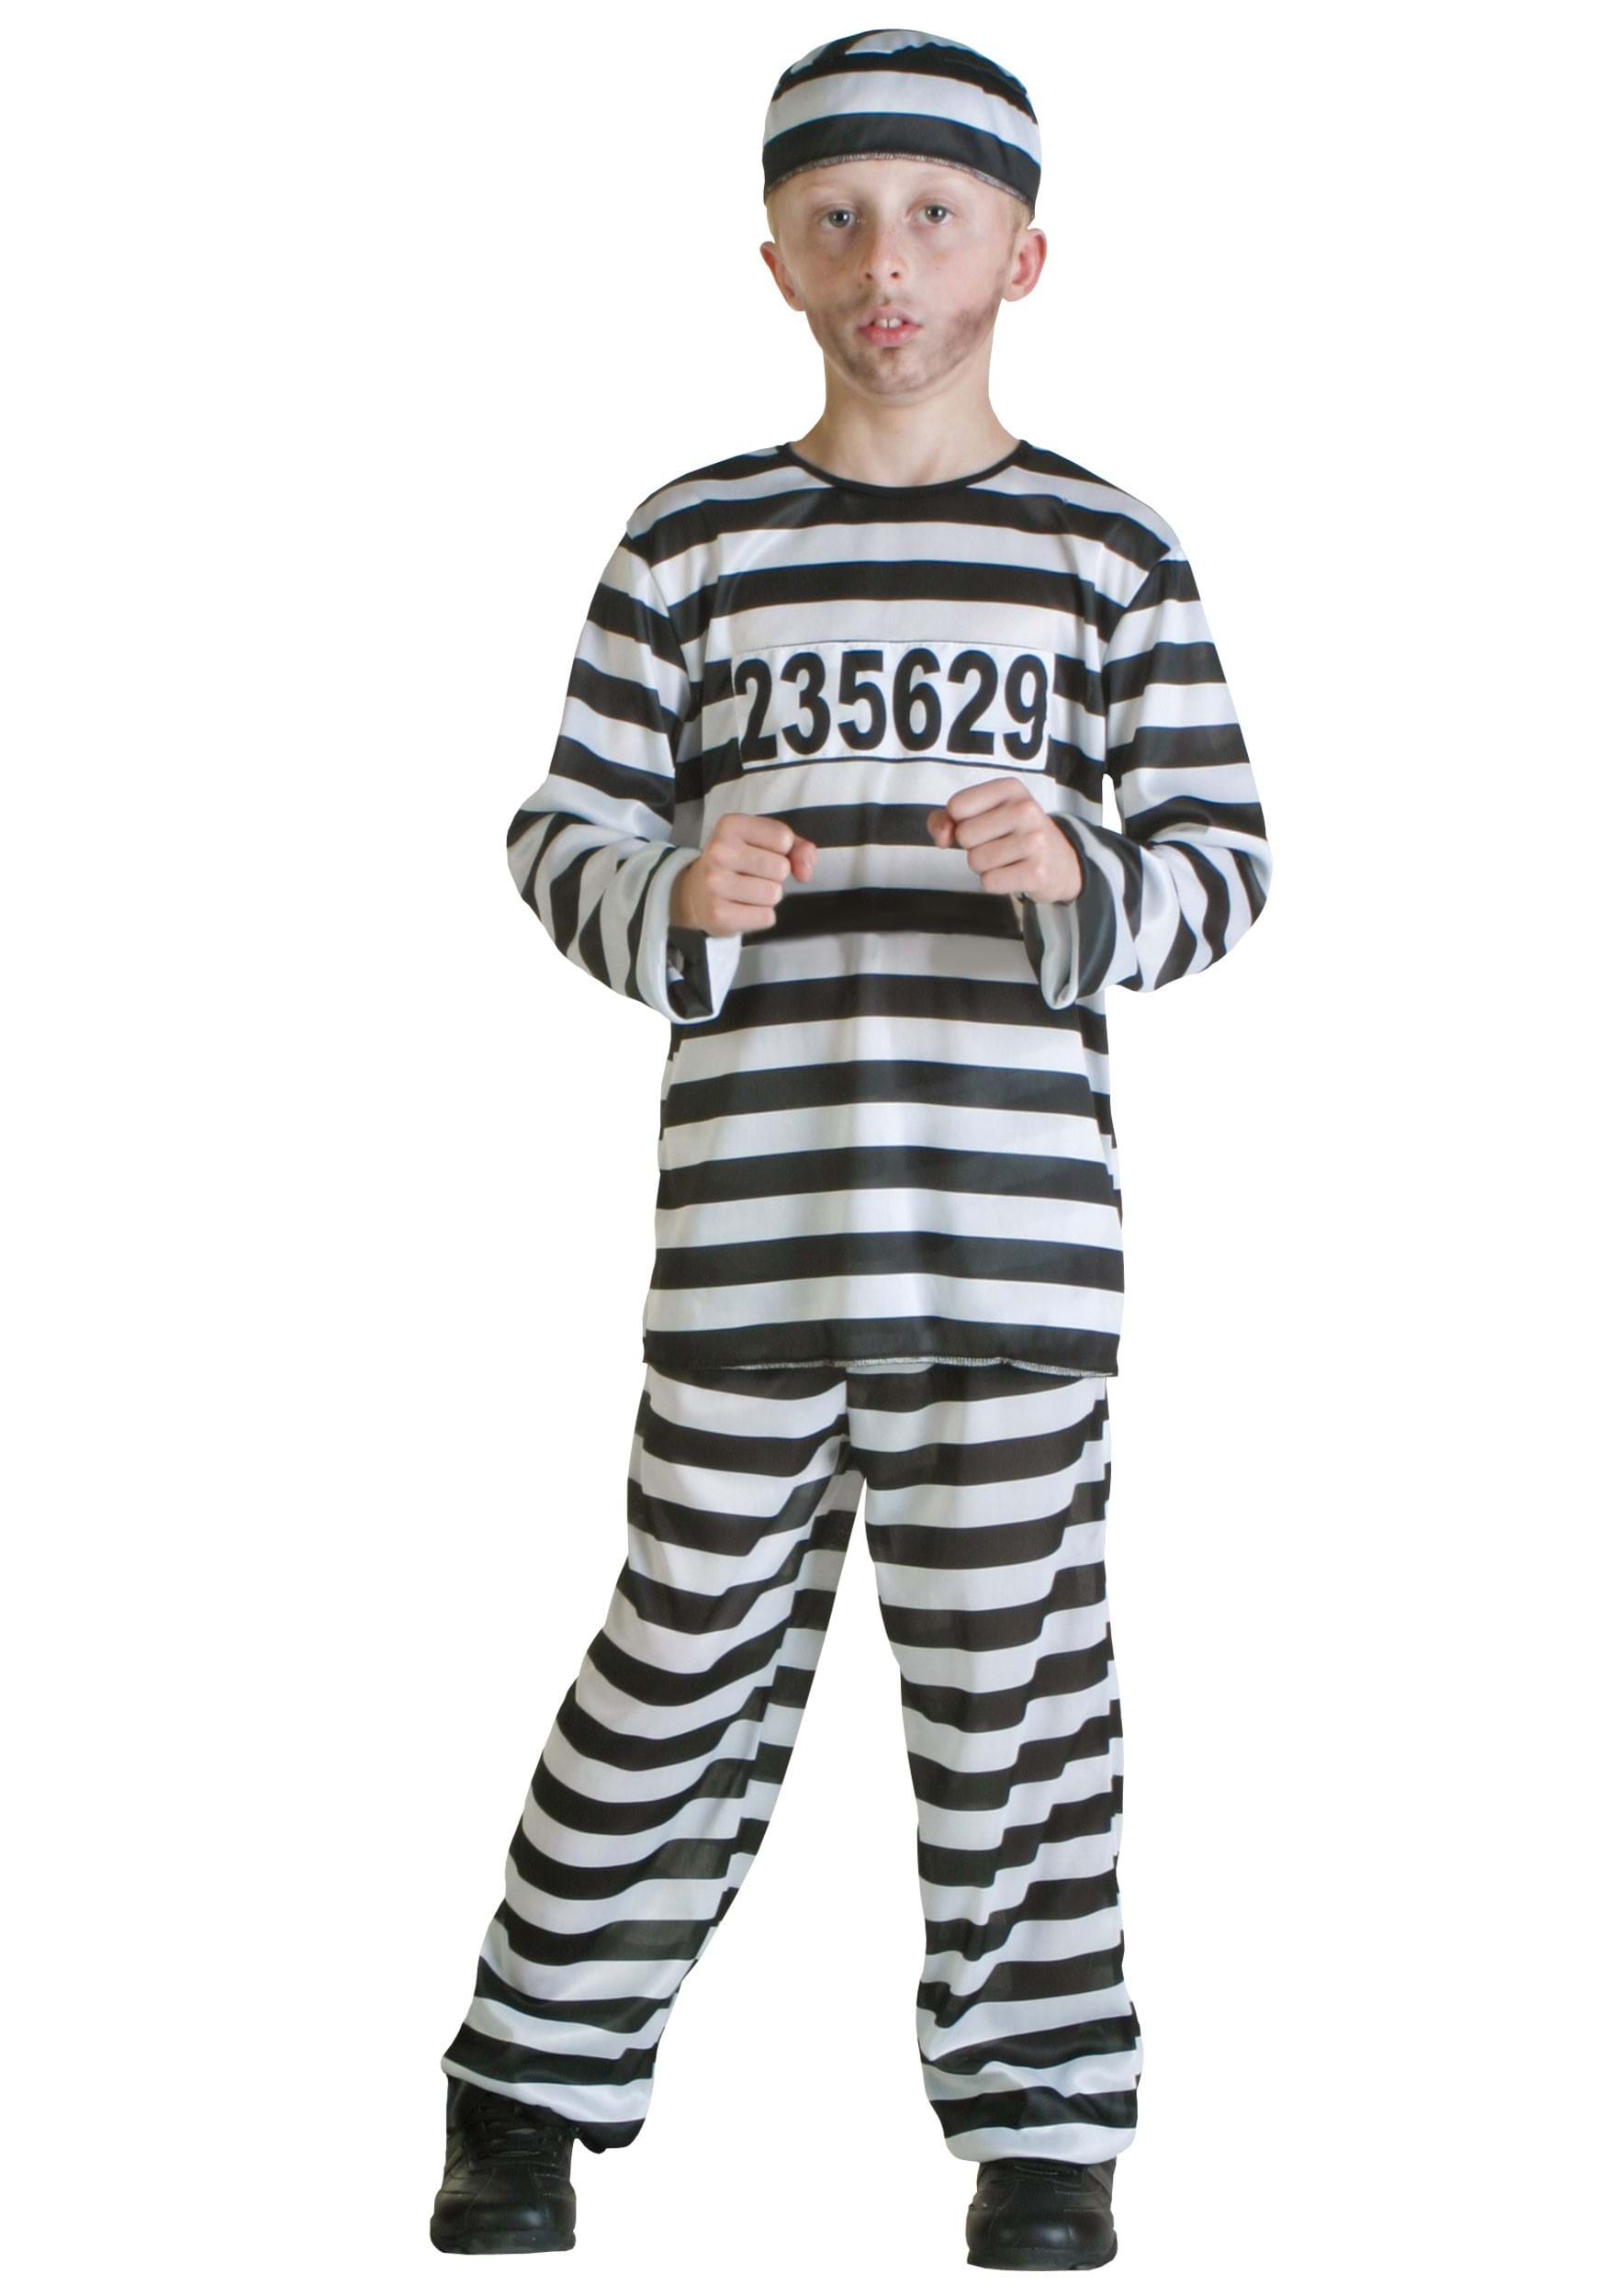 Photos - Fancy Dress FUN Costumes Prisoner Boys Costume Black/White FUN1534